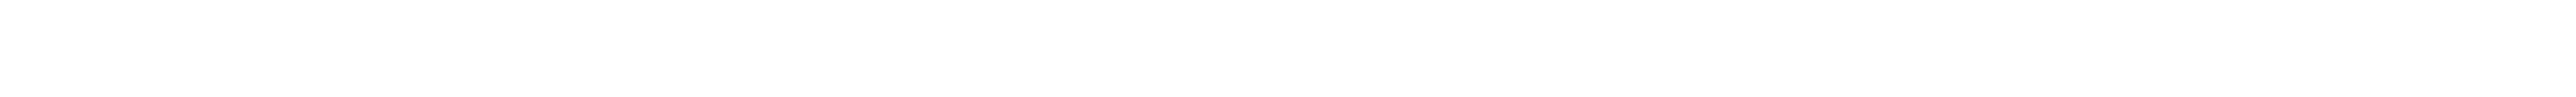 Mānoa Institutional Research Office logo